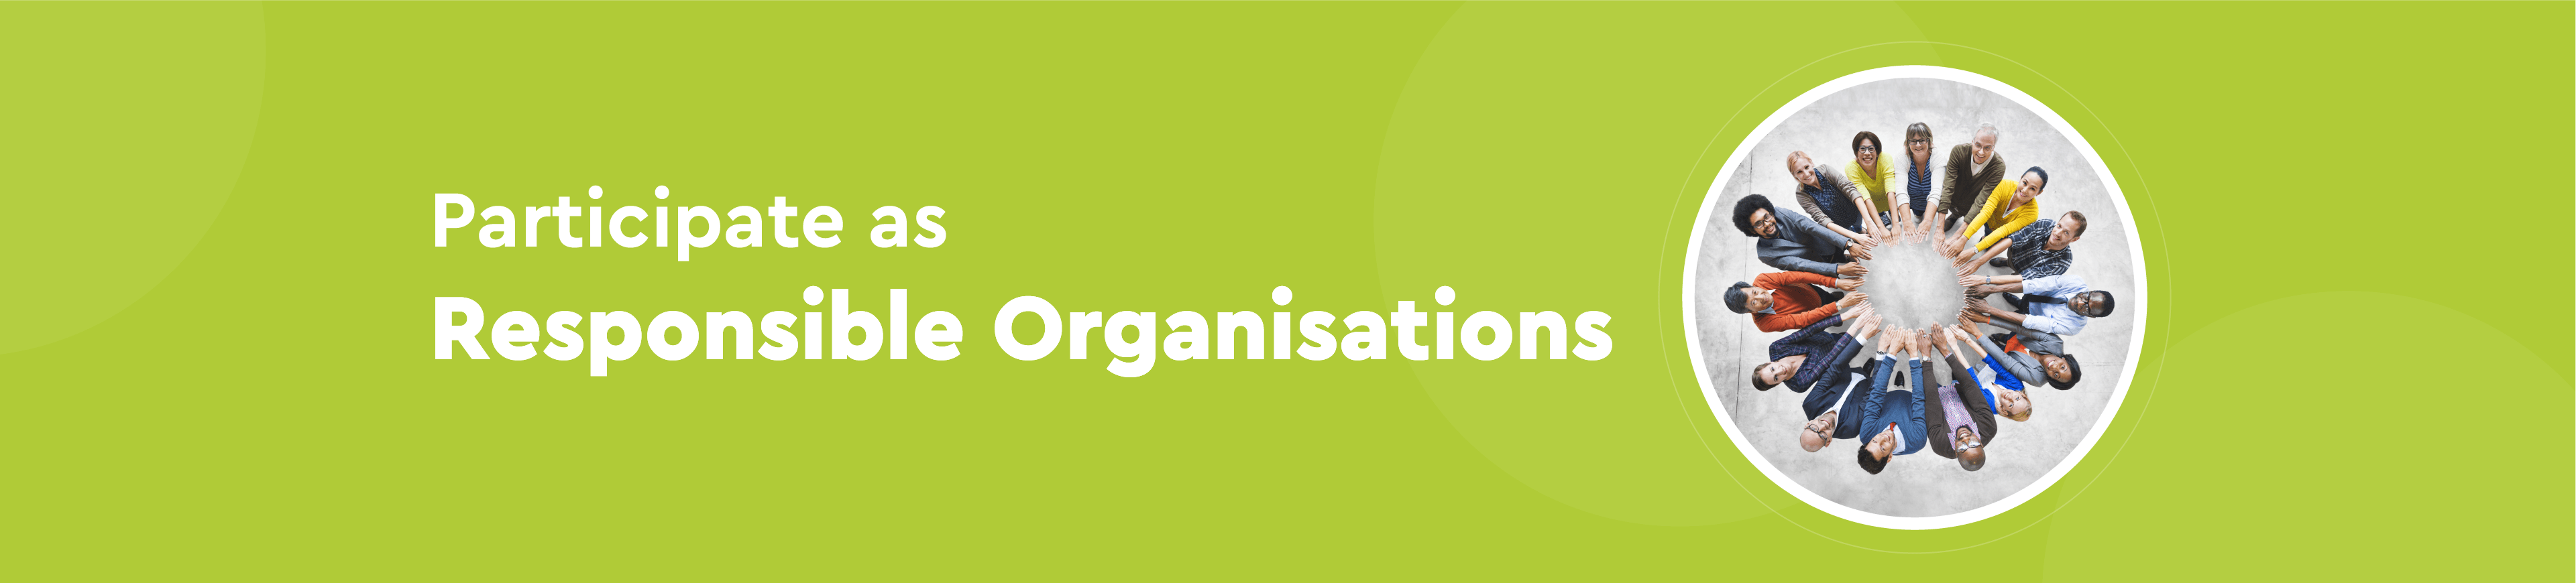 Responsible Organisations